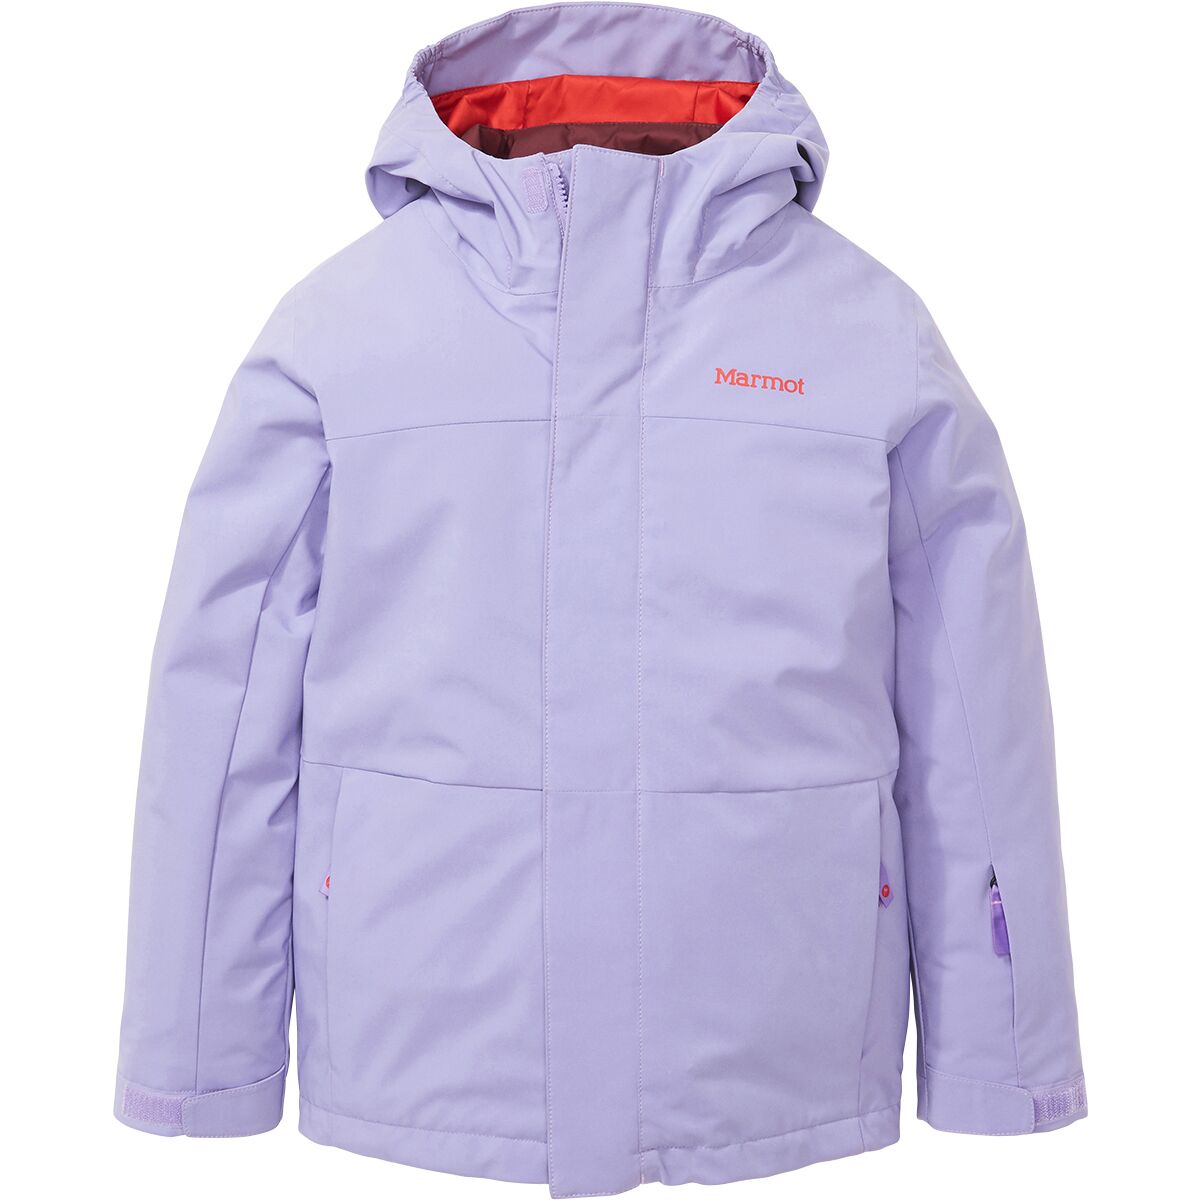 Marmot Precip Component 3-in-1 Jacket - Kids' Paisley Purple